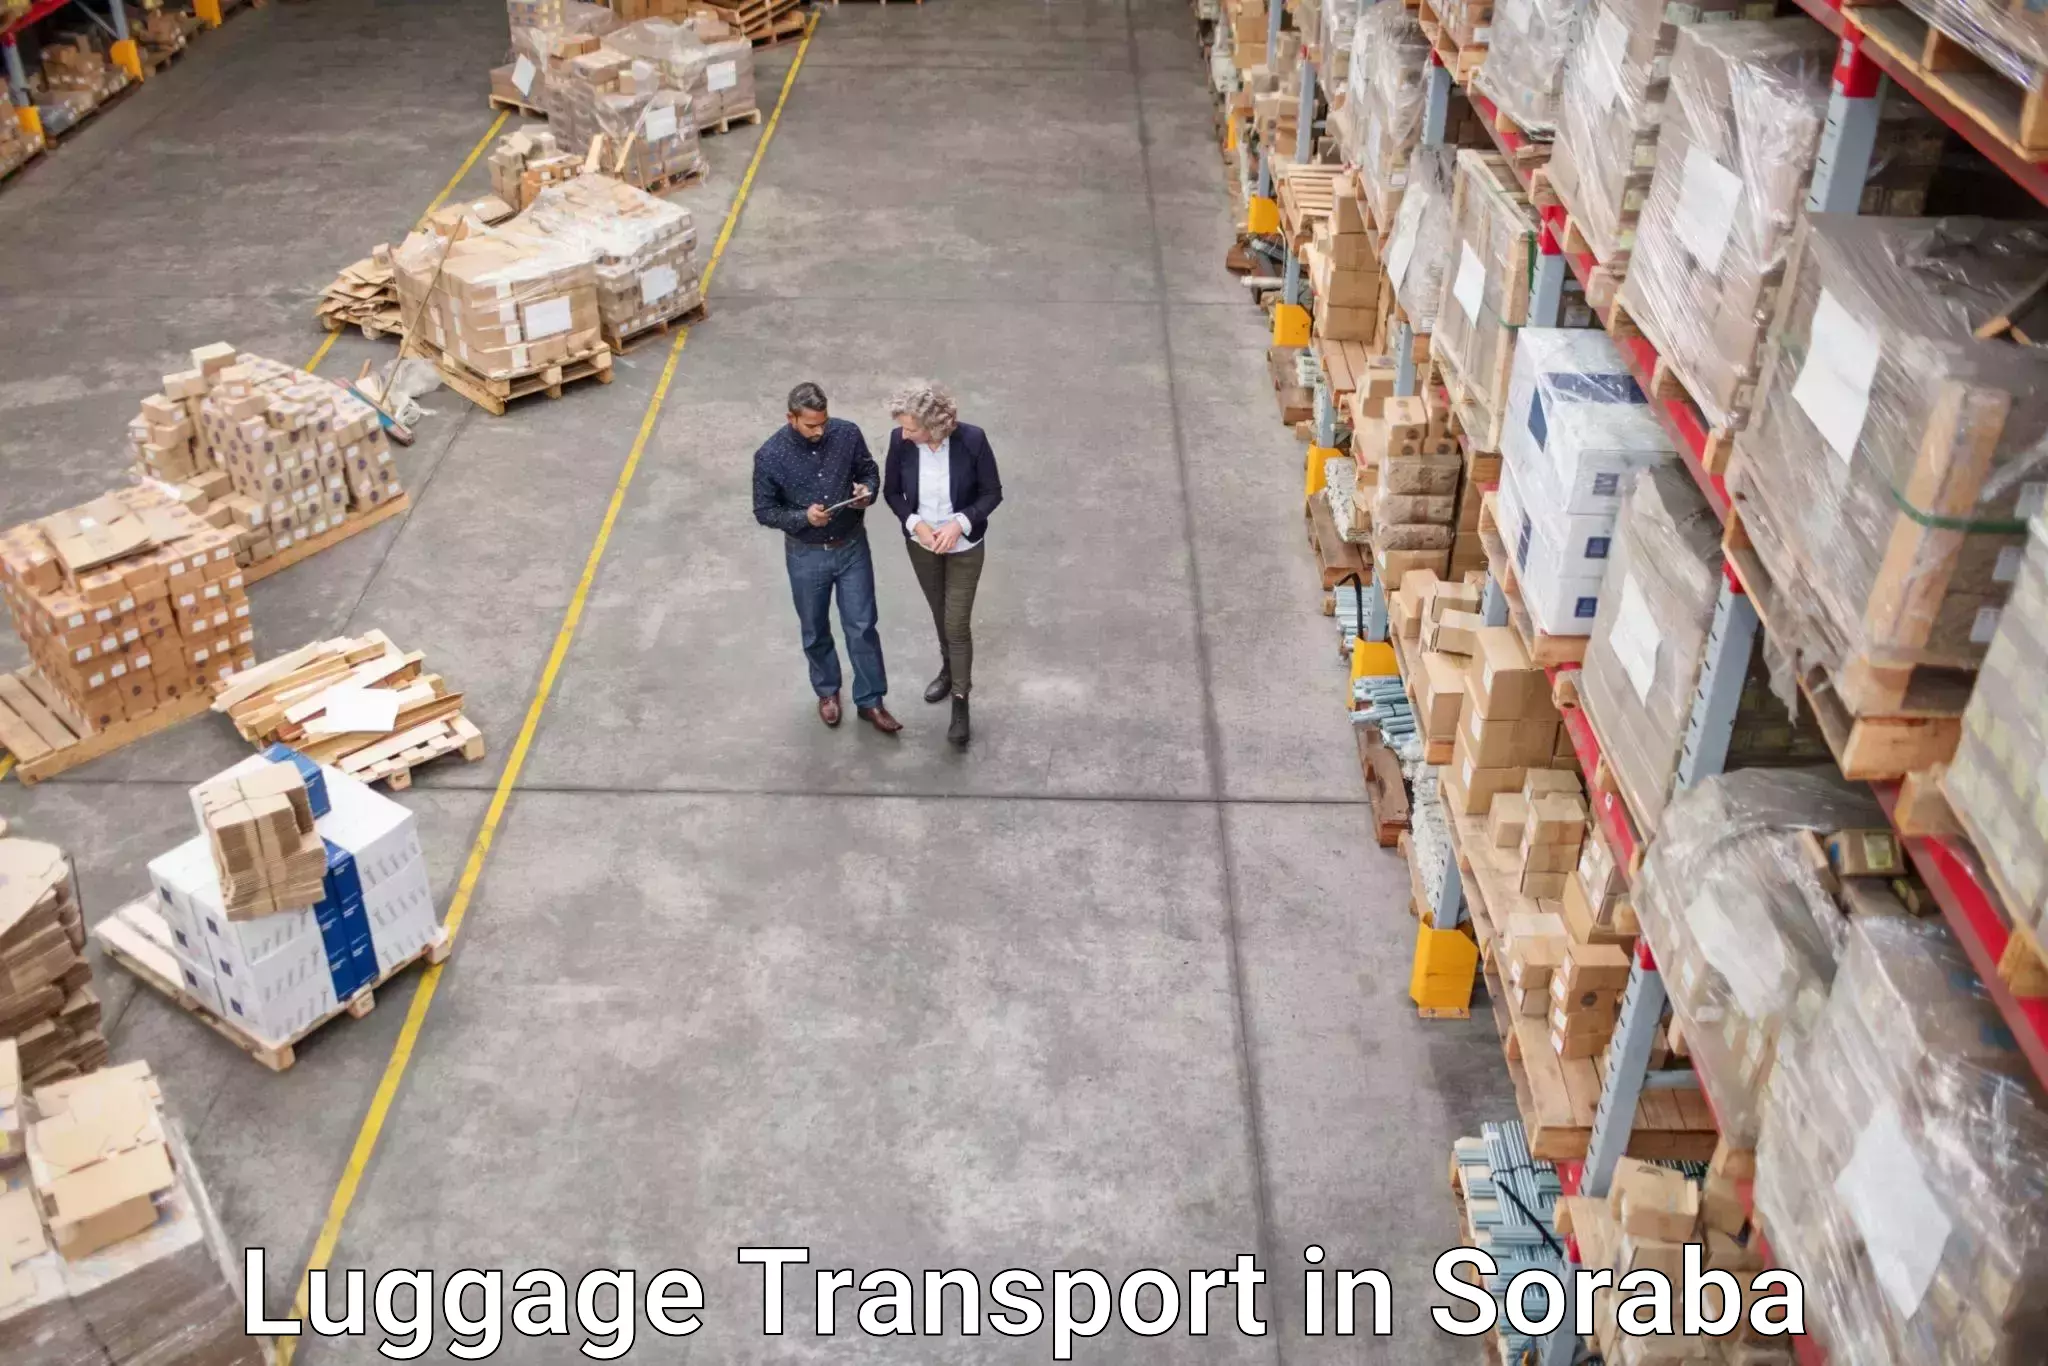 Luggage transport consultancy in Soraba